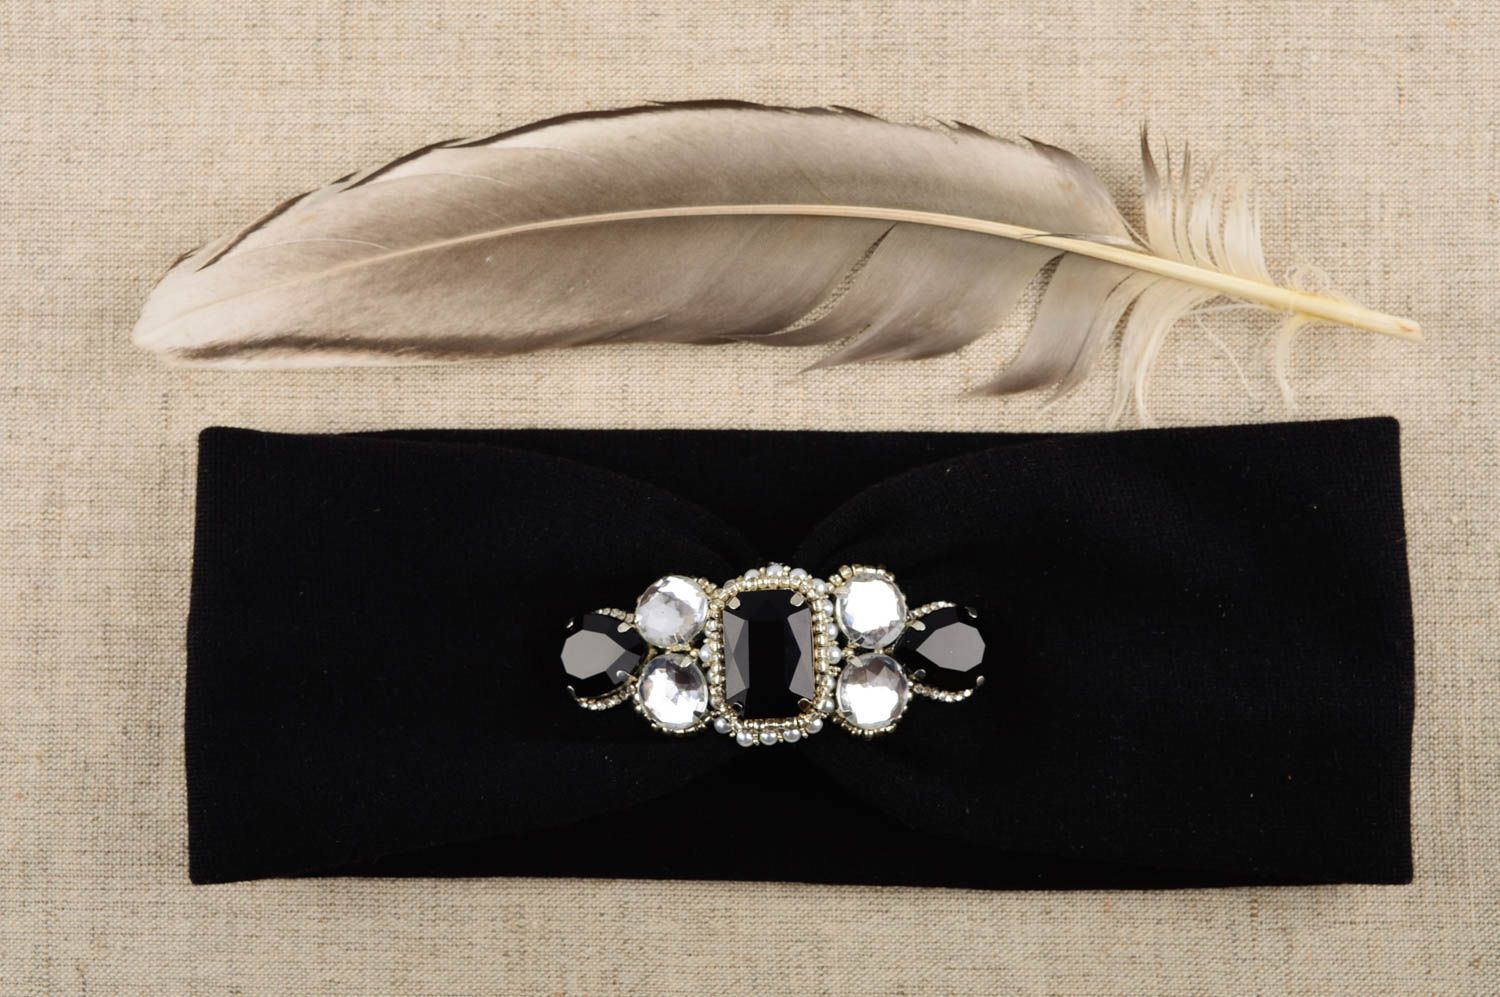 Handmade headband unusual designer accessories stylish beautiful jewelry photo 1